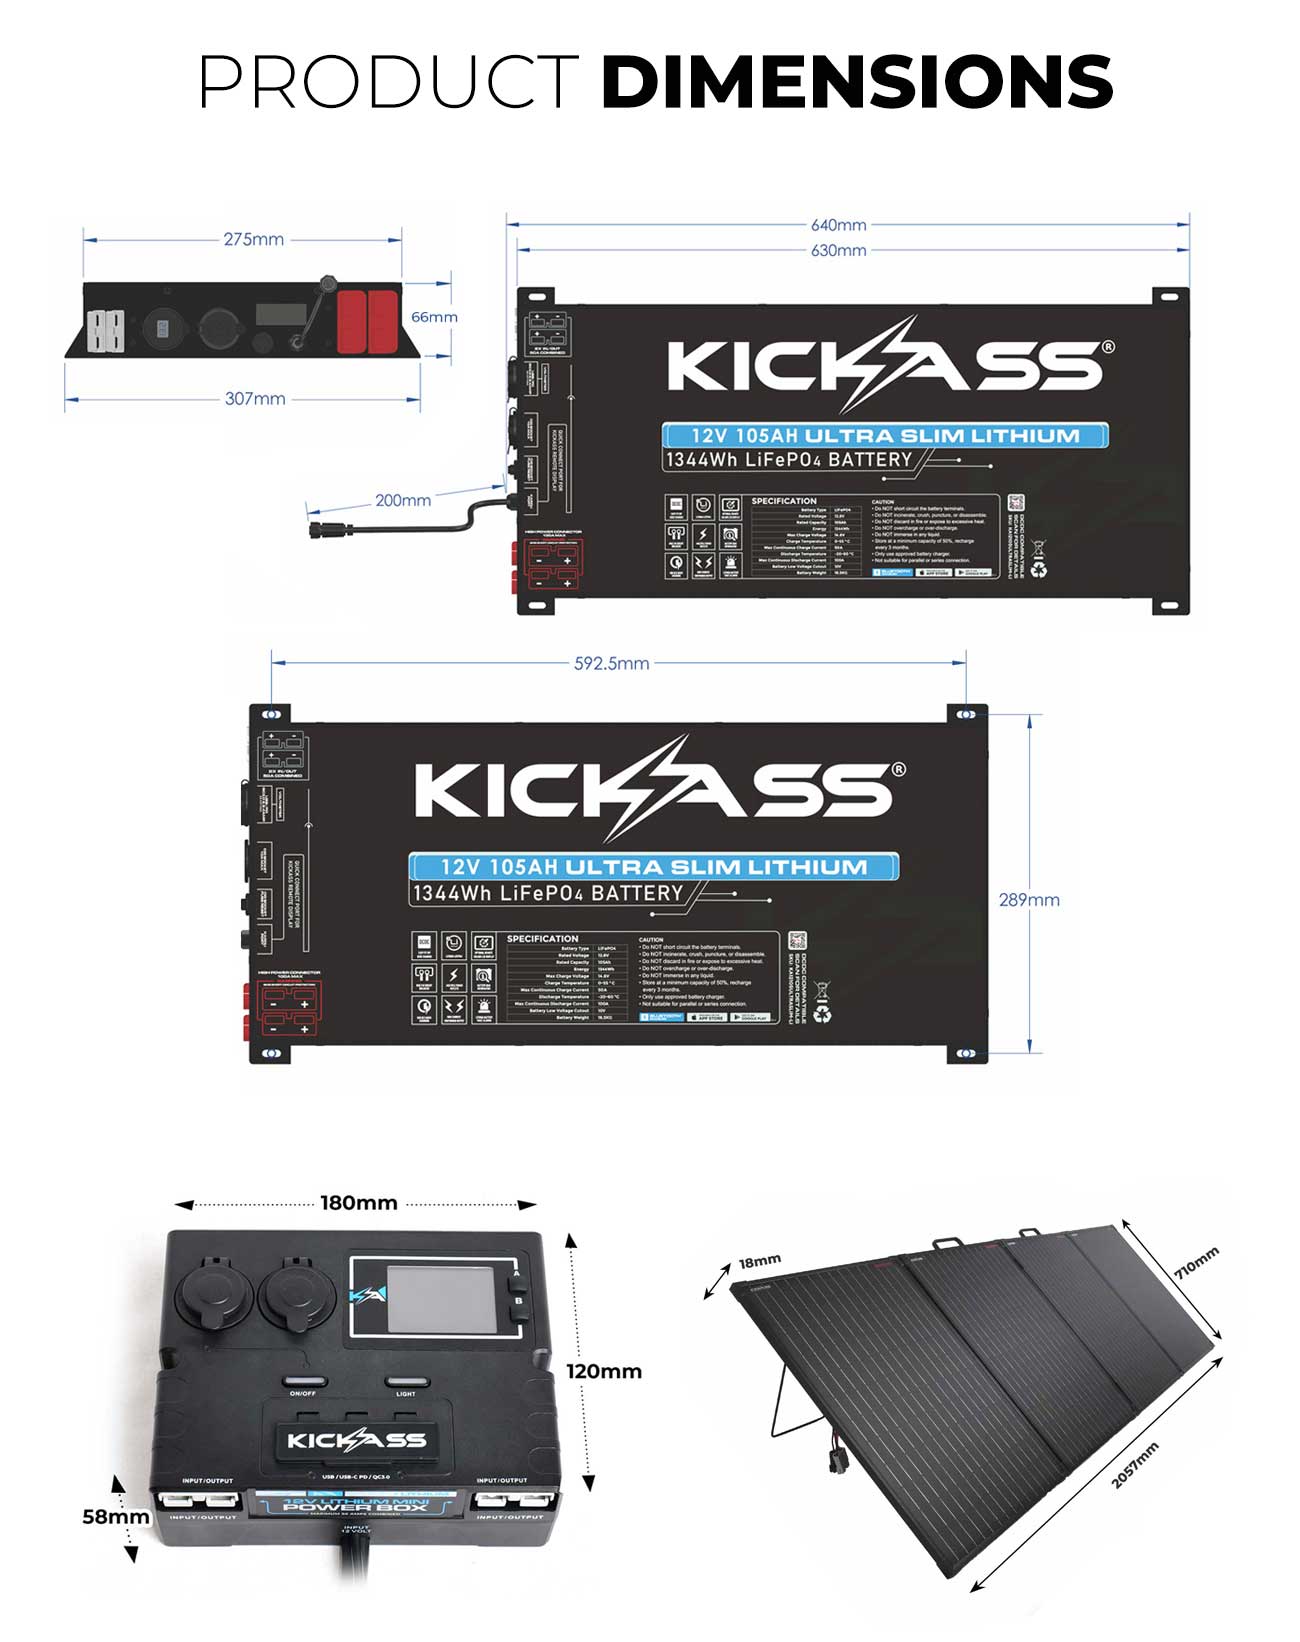 KickAss 12V 105AH Ultra Slim LiFePO4 Lithium Battery Complete Bundle